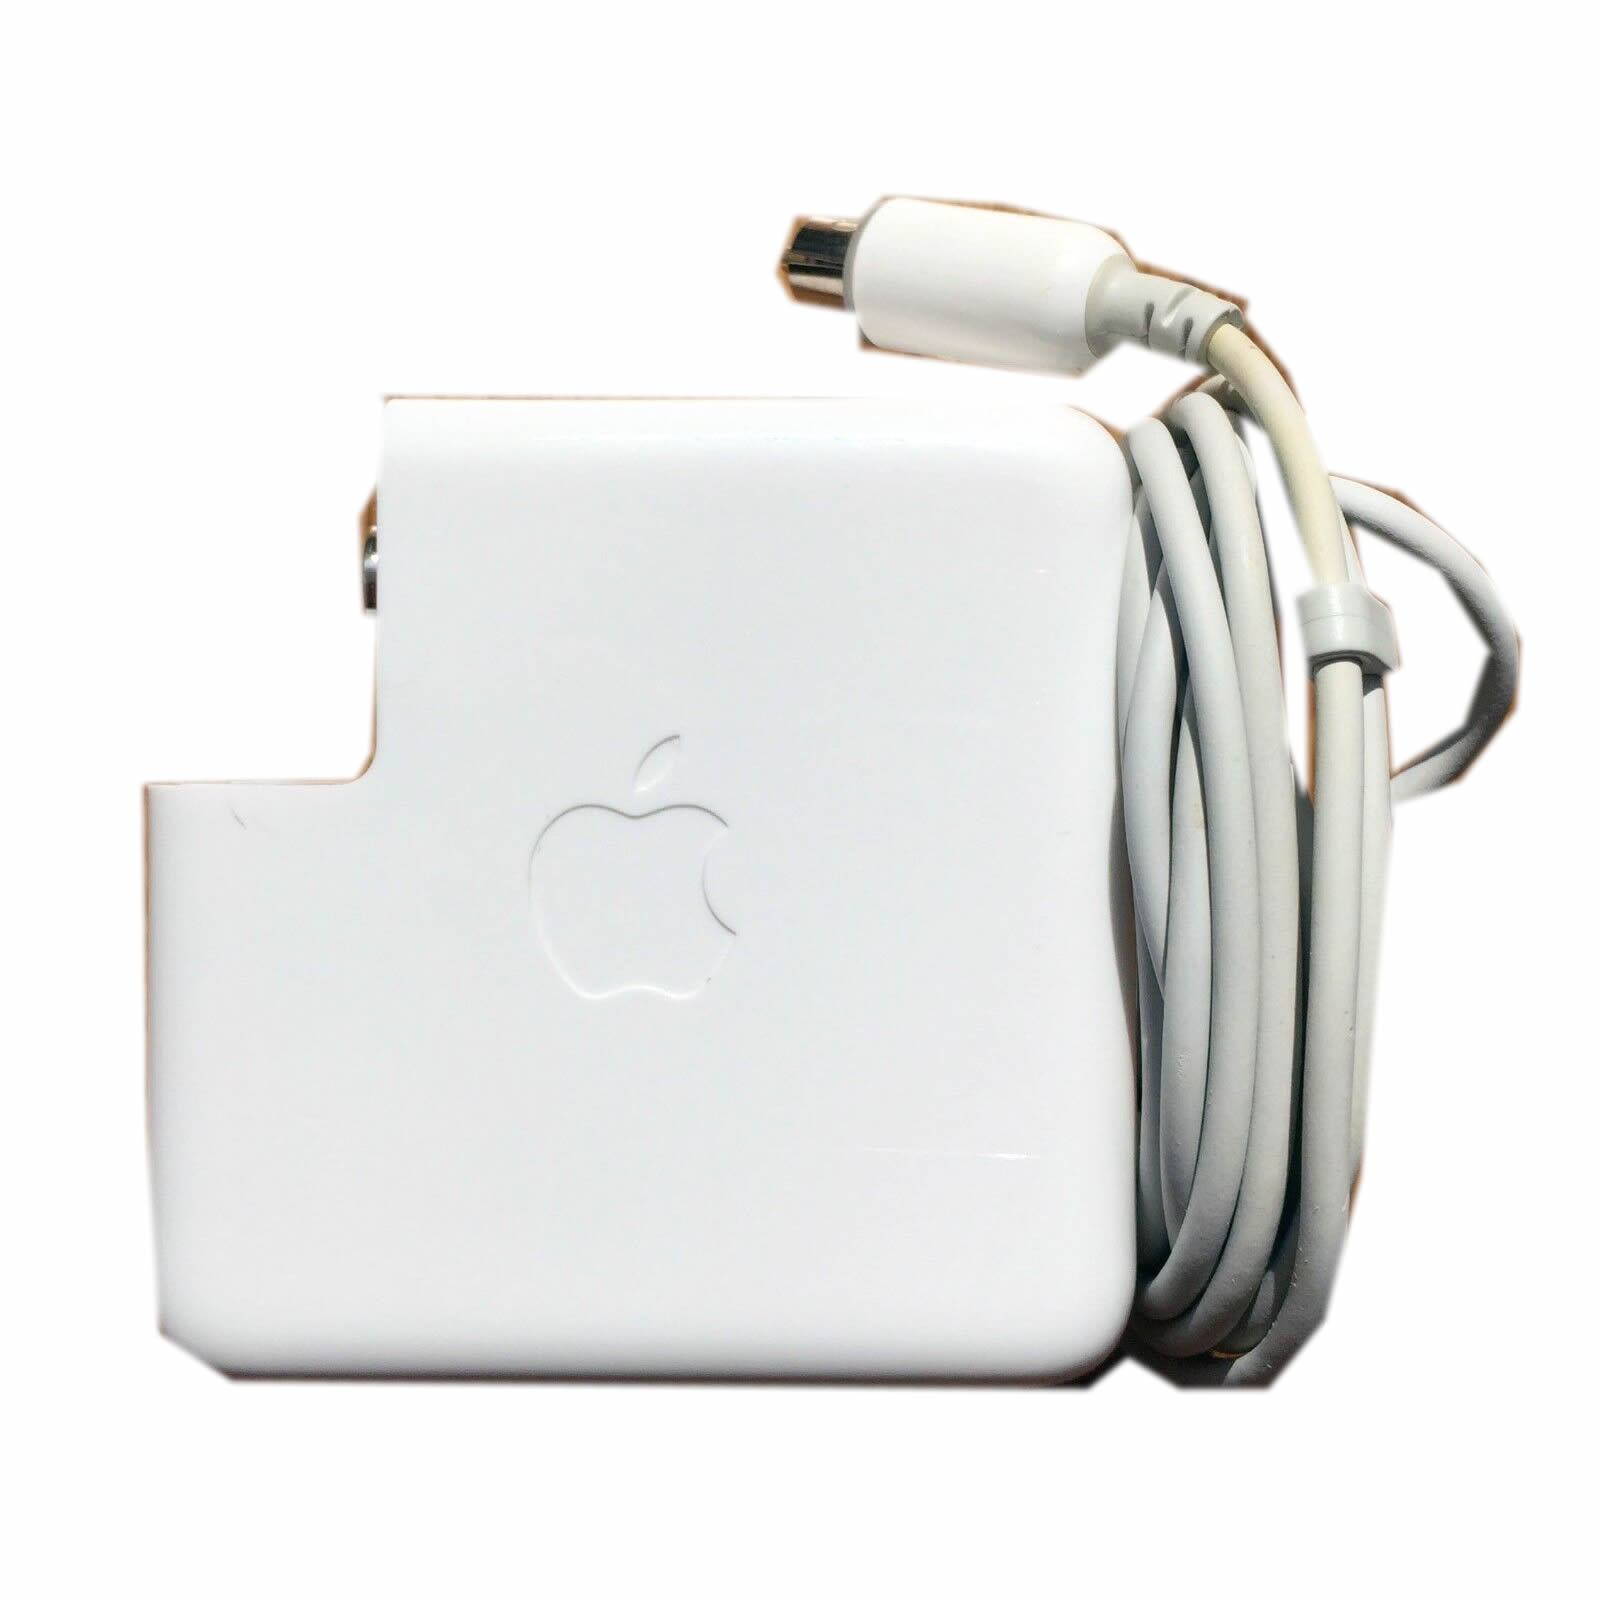 apple apple ibook laptop ac adapter